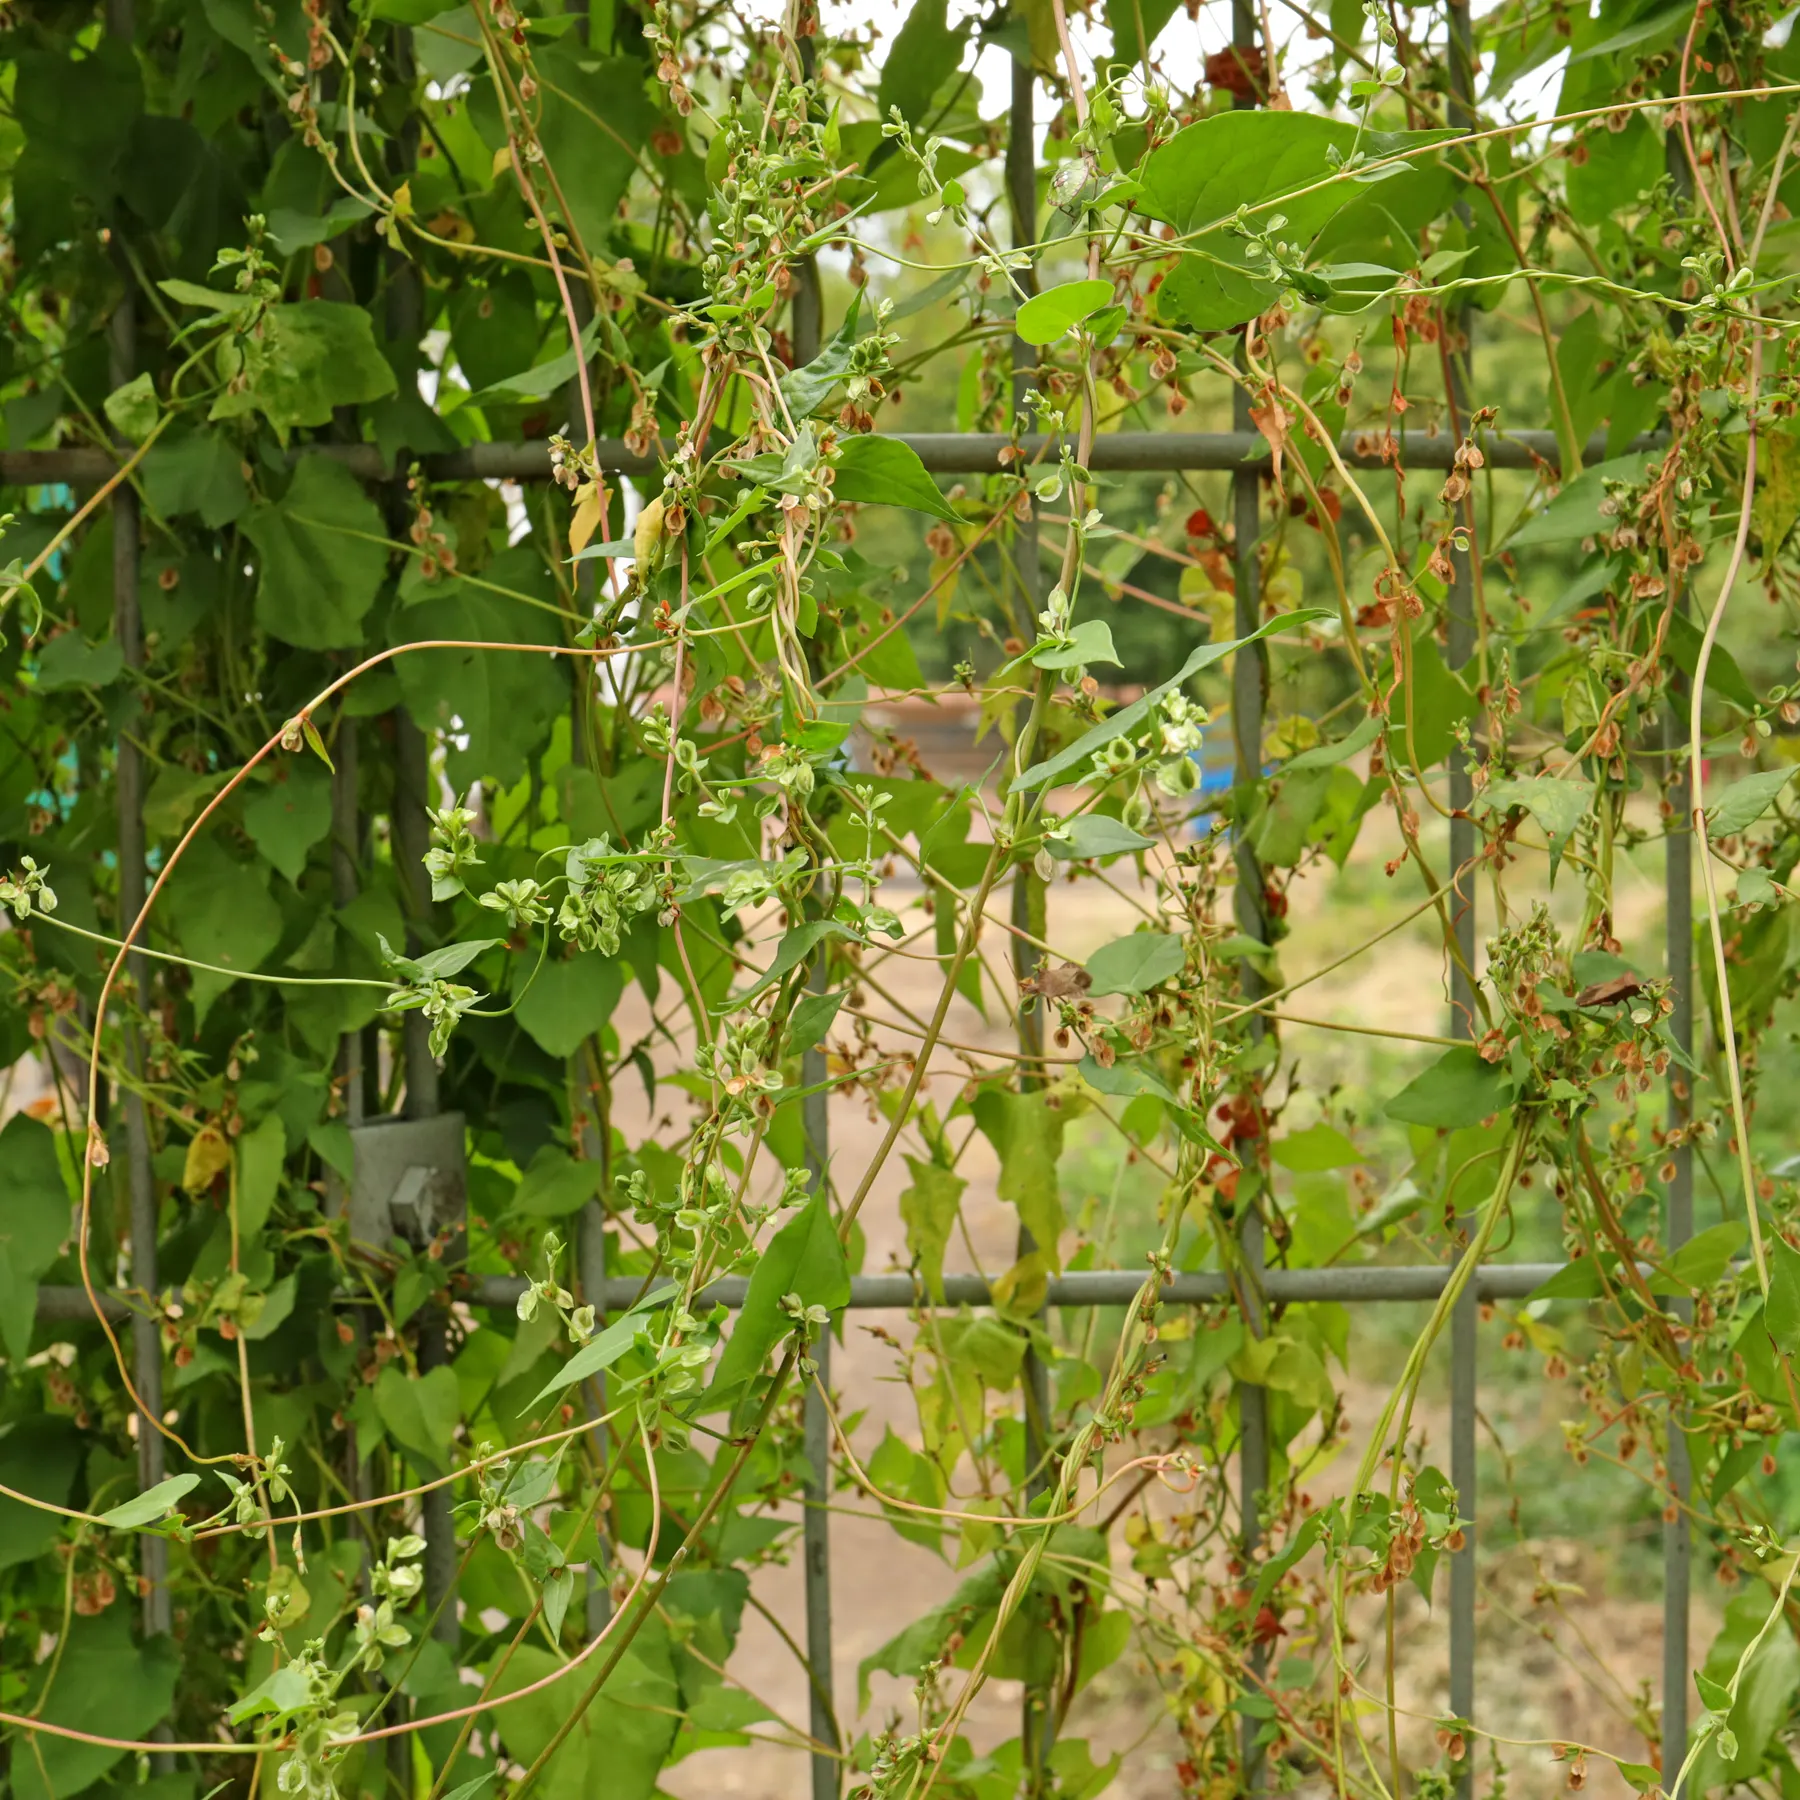 Black Bindweed growing on a fence